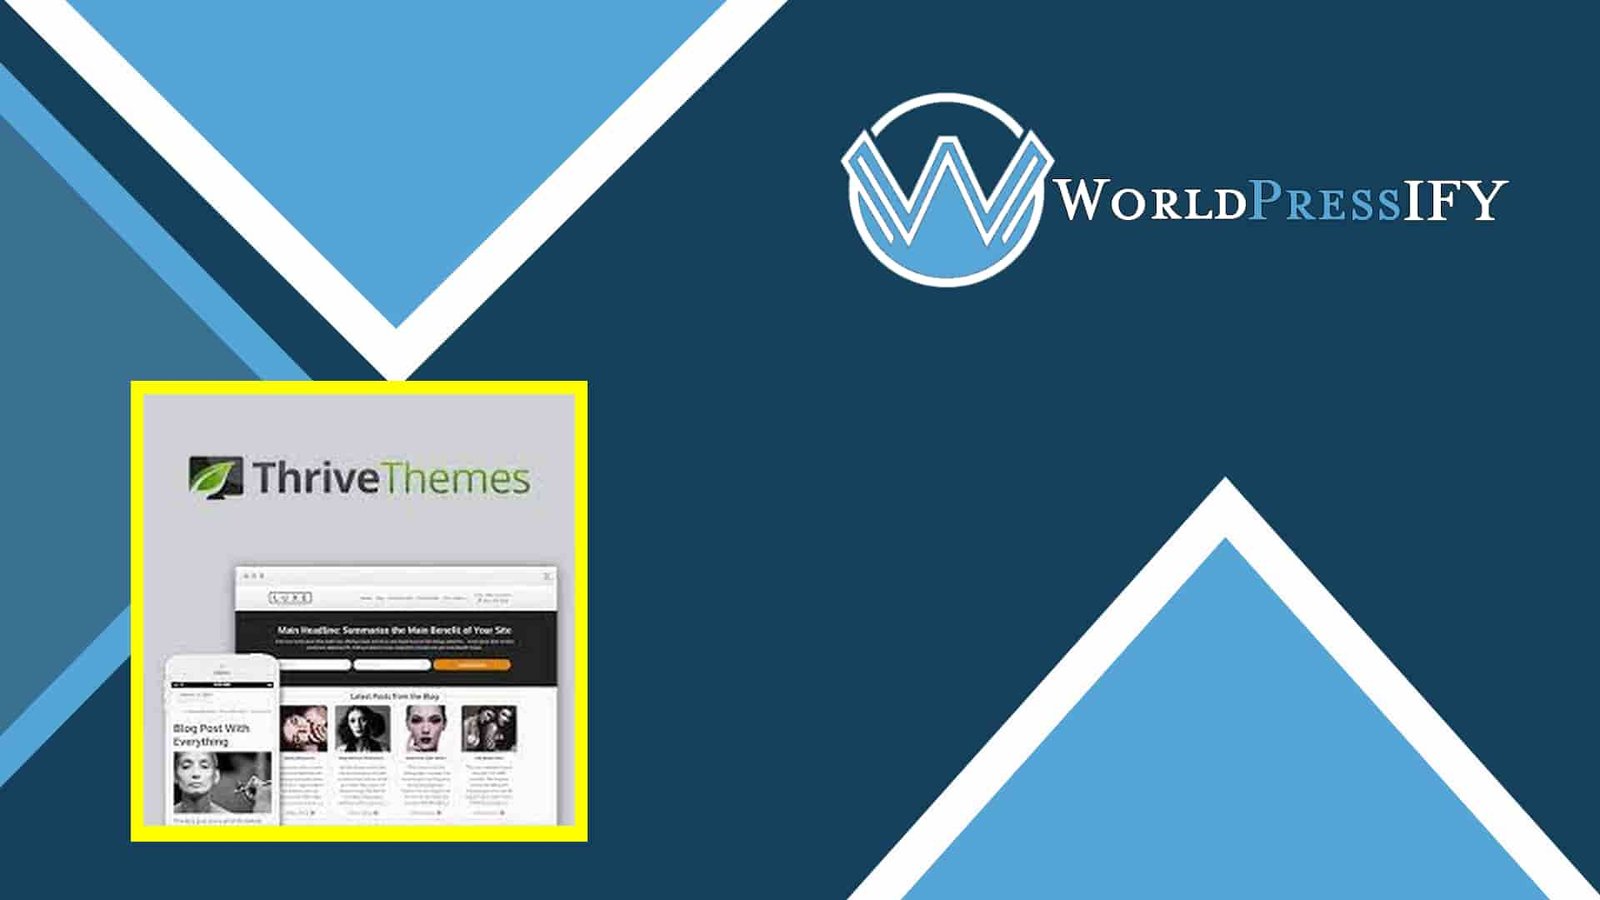 Thrive Themes Luxe WordPress Theme - WorldPress IFY